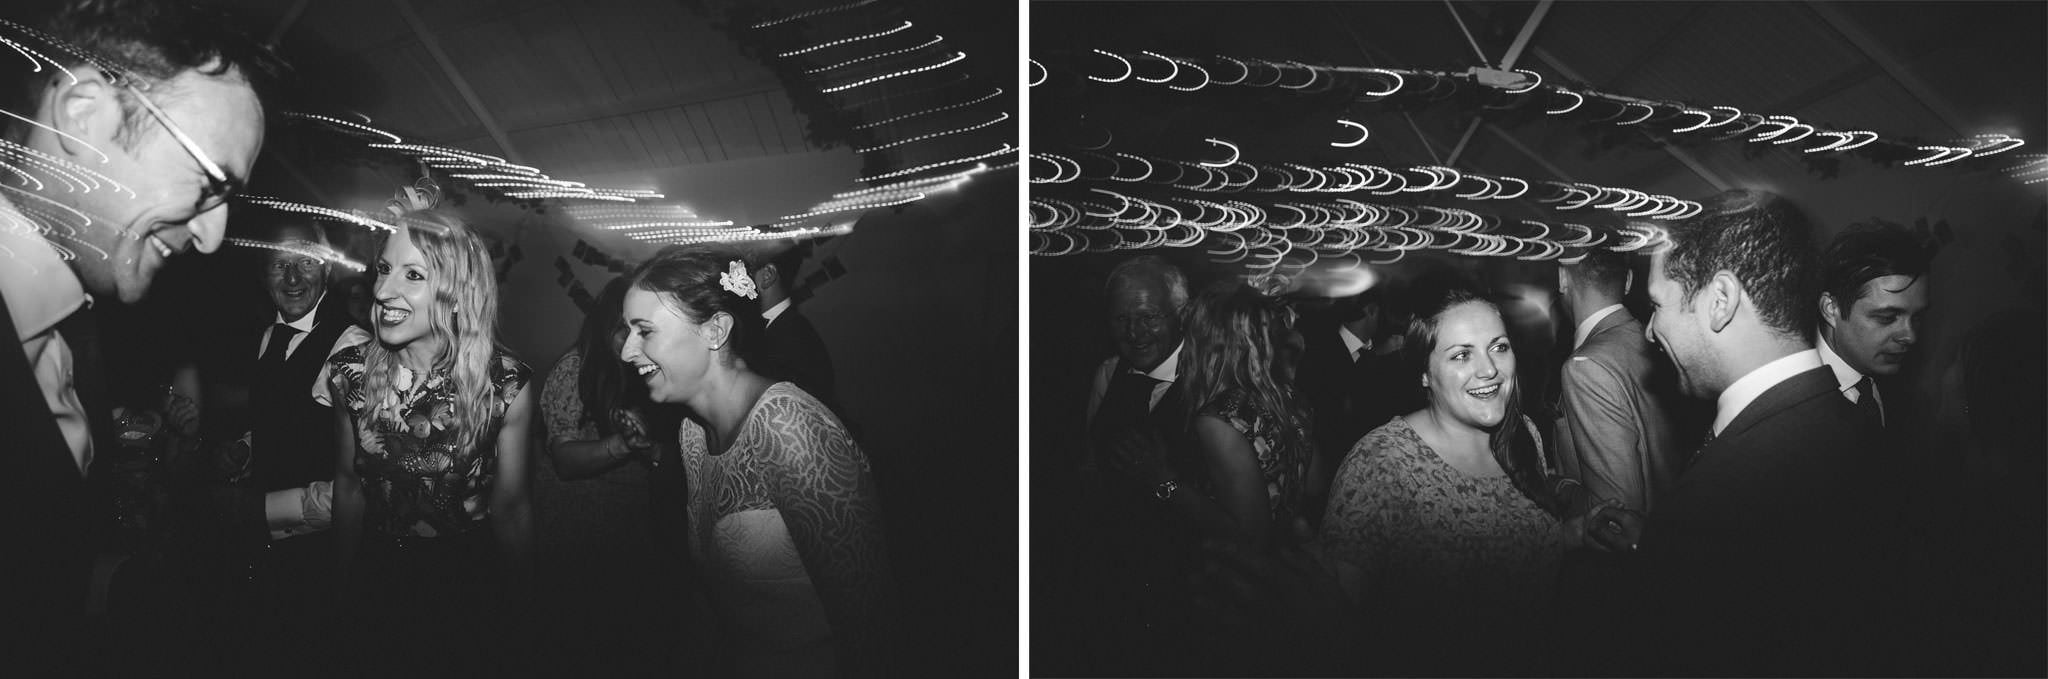 wedding-elopement-photography-crear-153